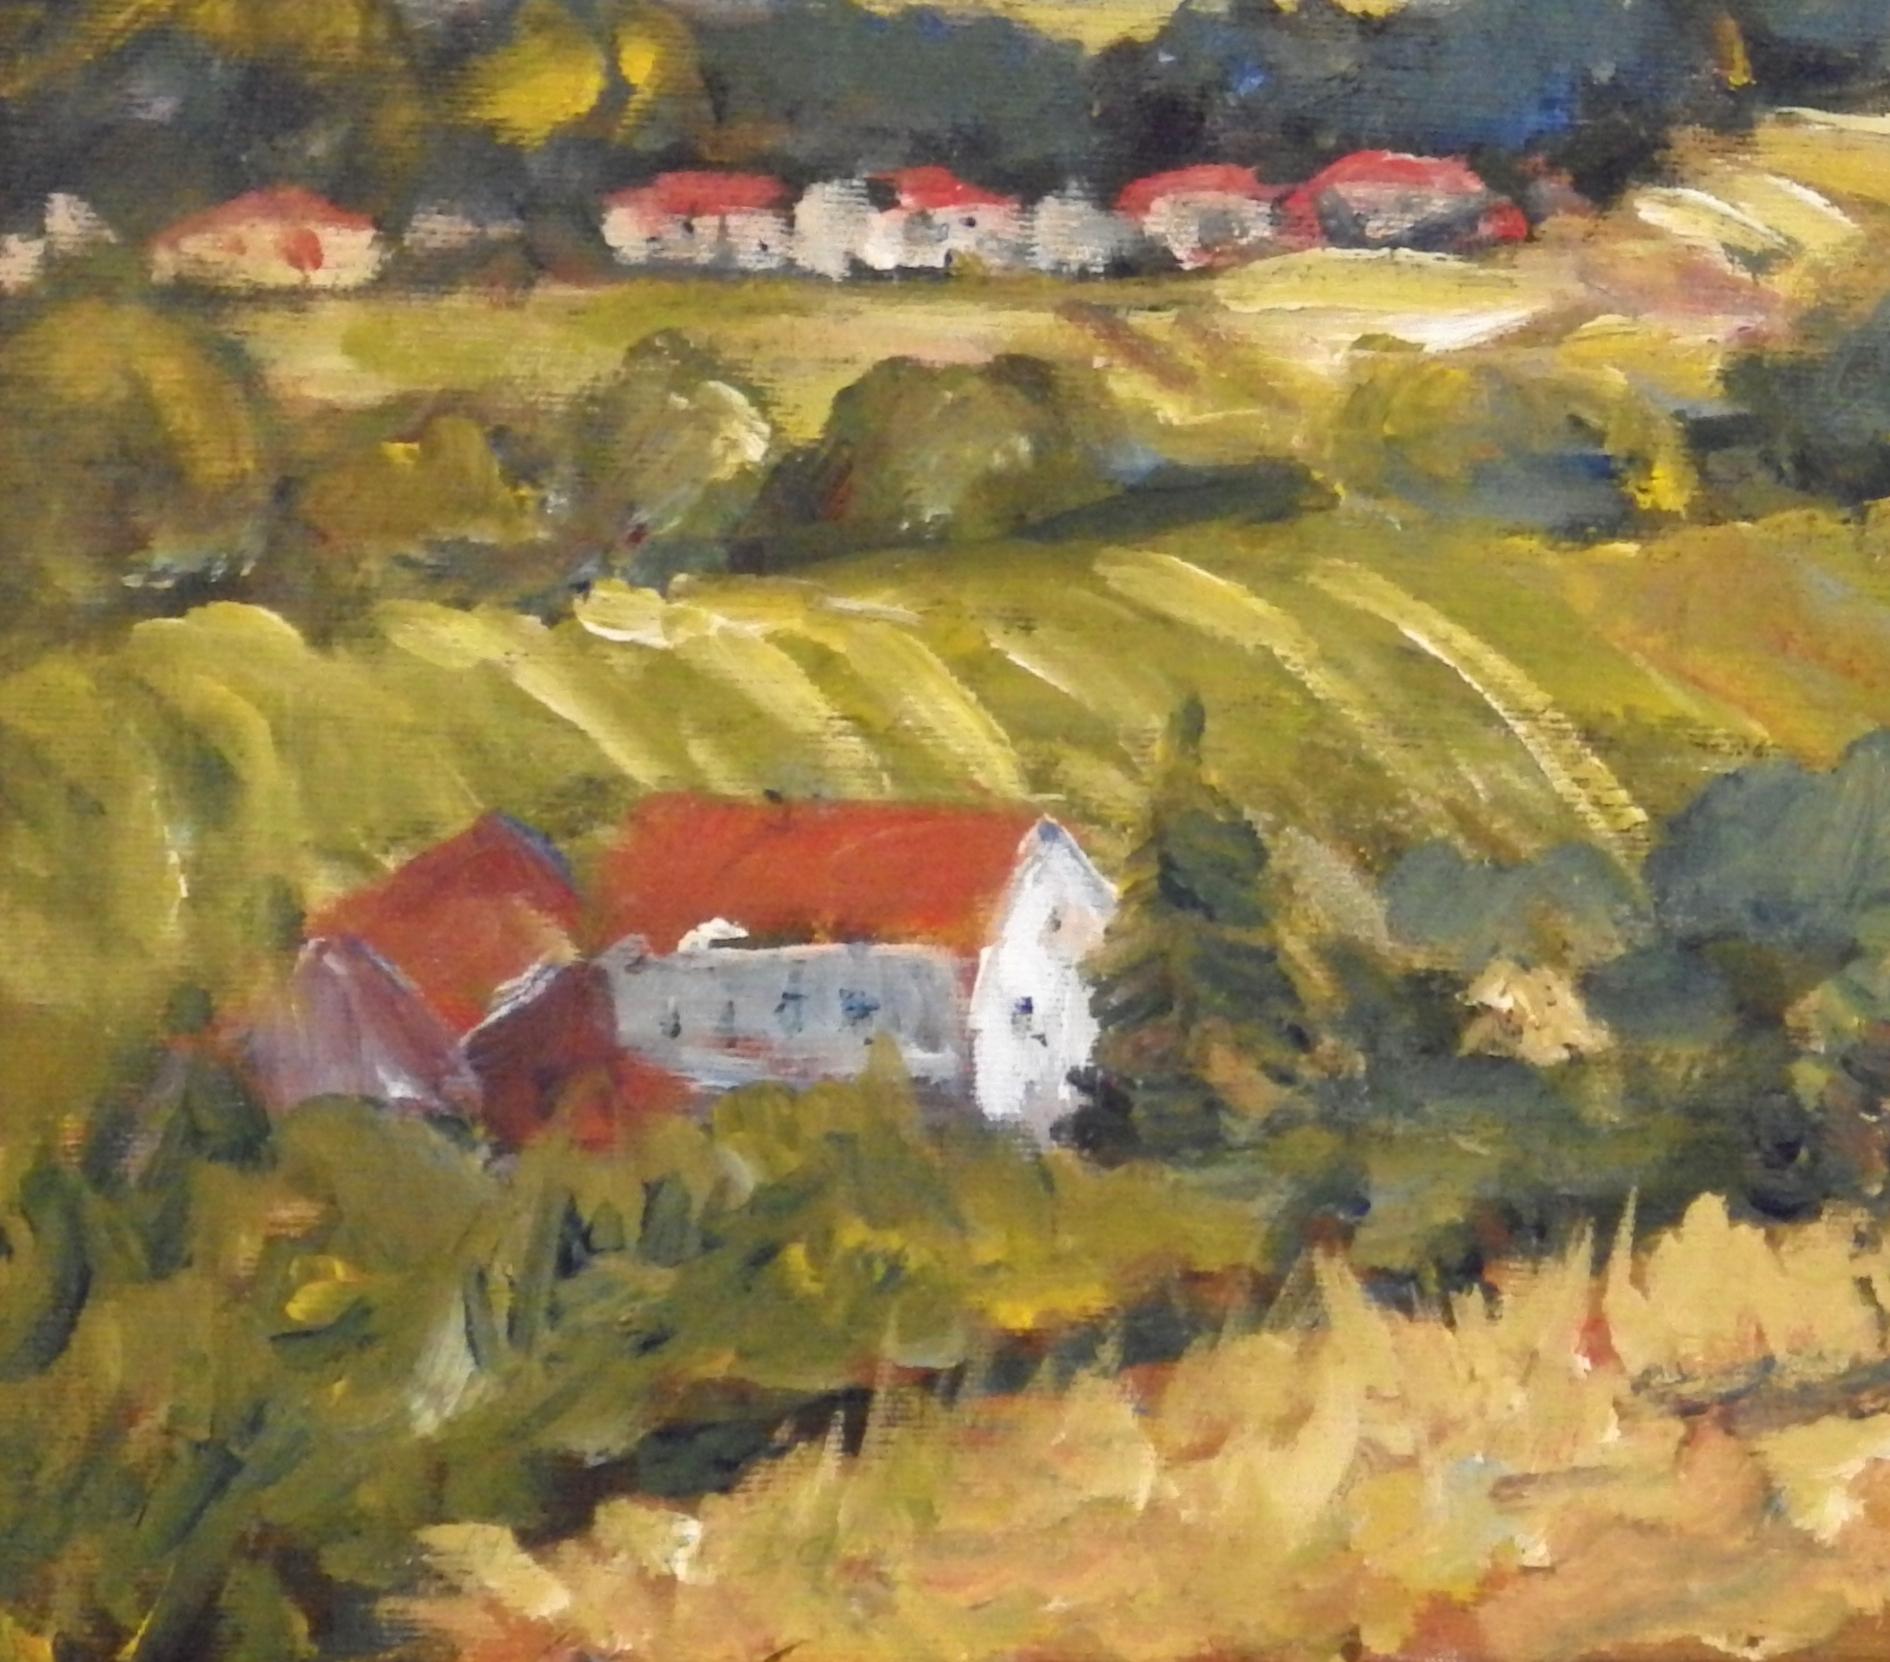 Edt Austria, Original Contemporary Impressionist Landscape Painting, 2014
16